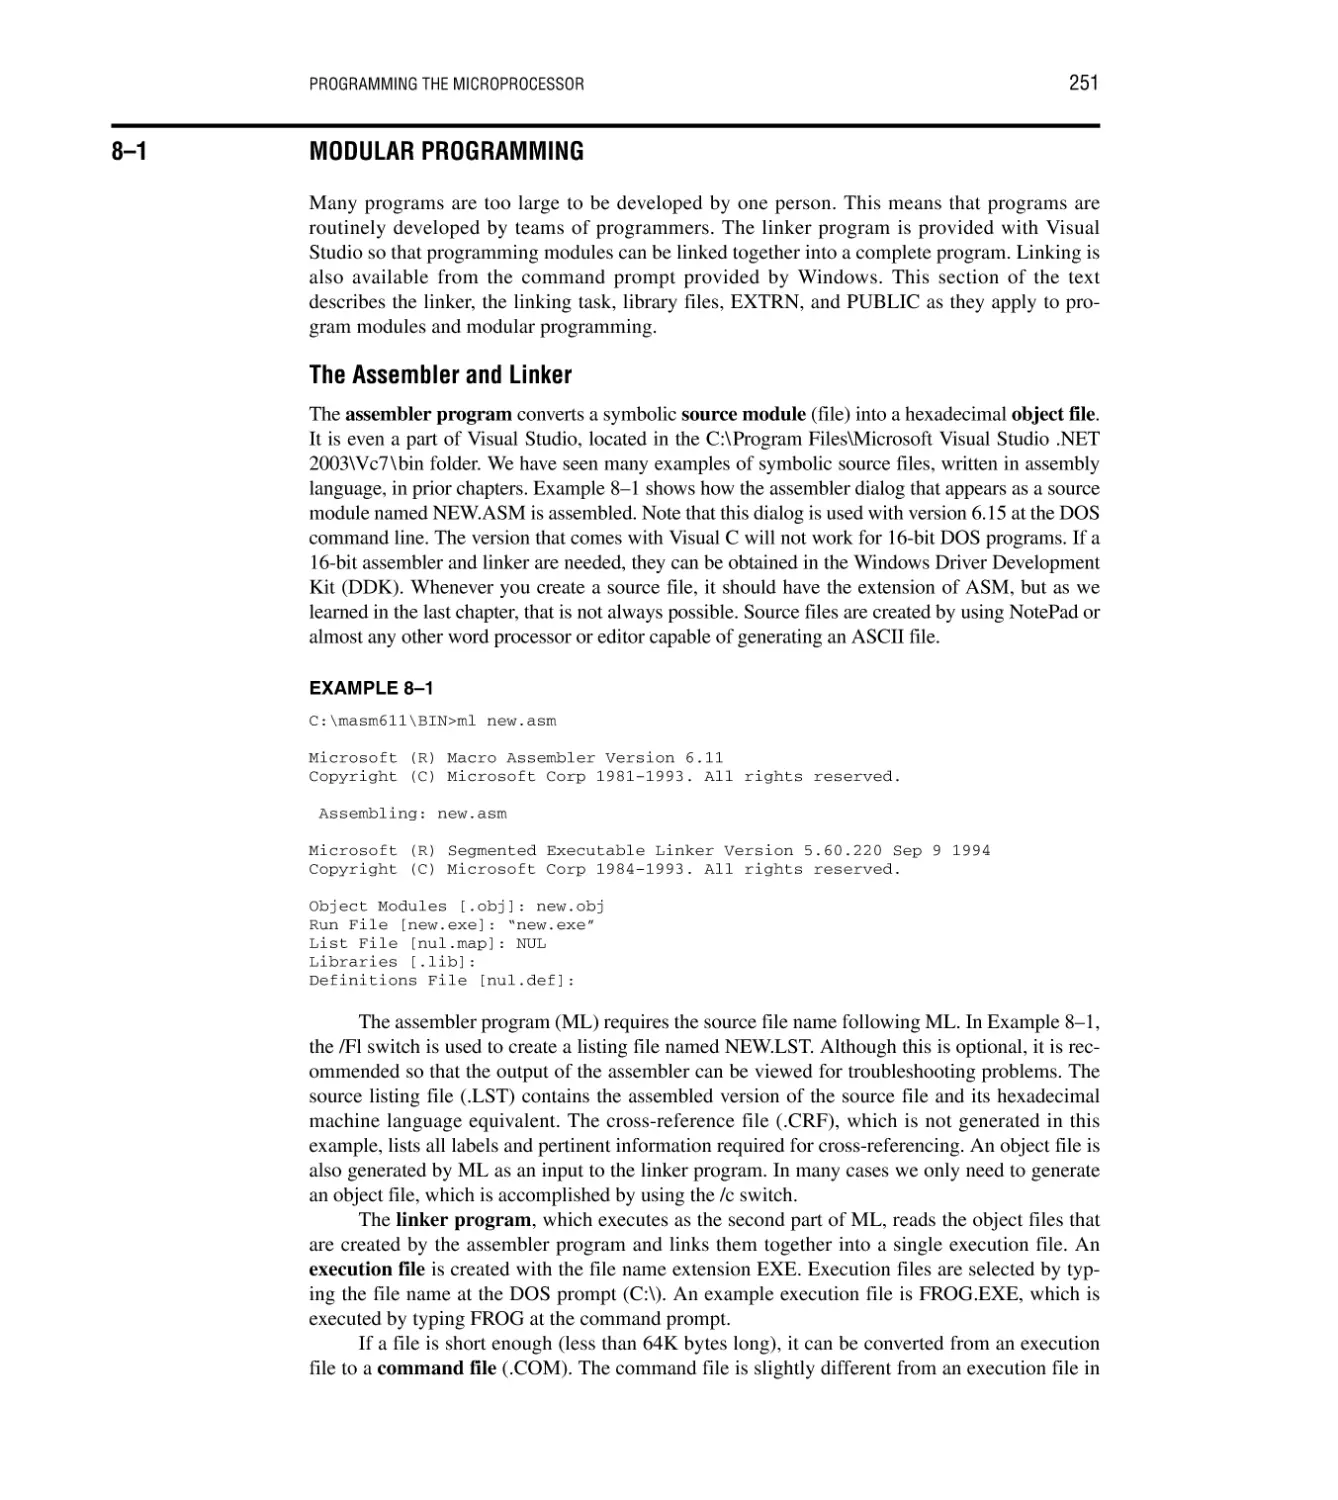 8–1 Modular Programming
The Assembler and Linker